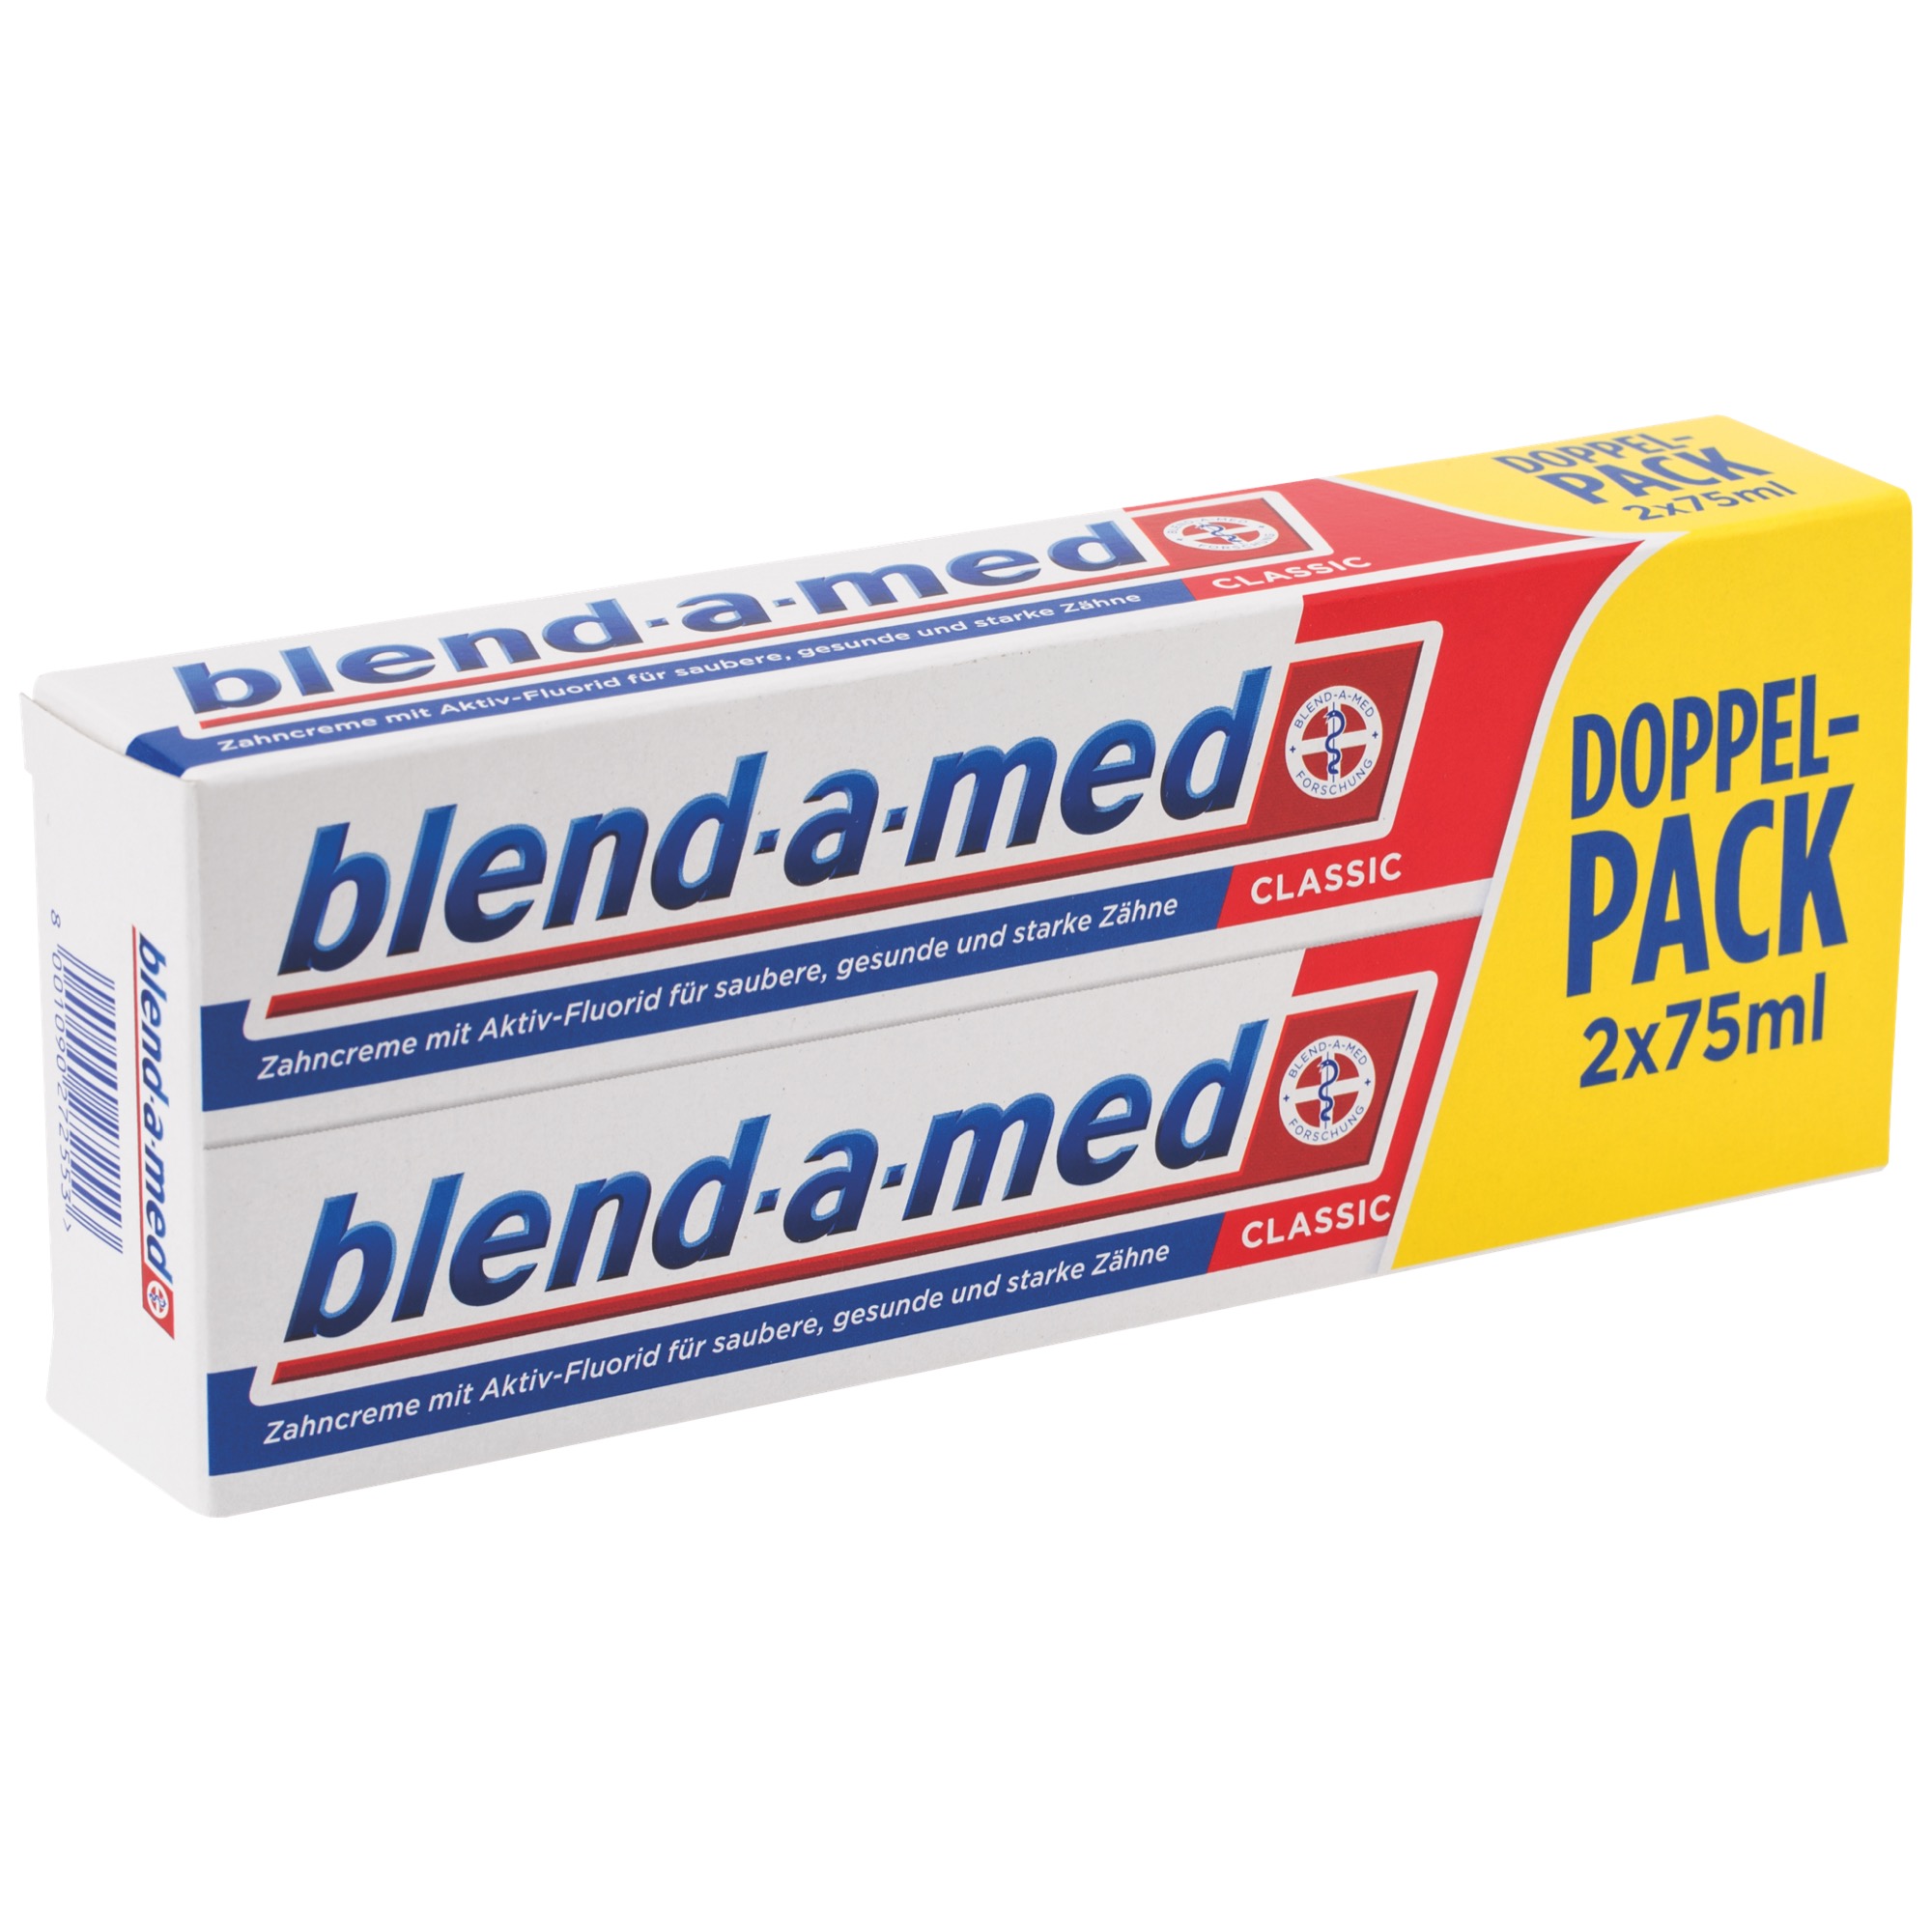 Blend a Med 2x75ml, Classic